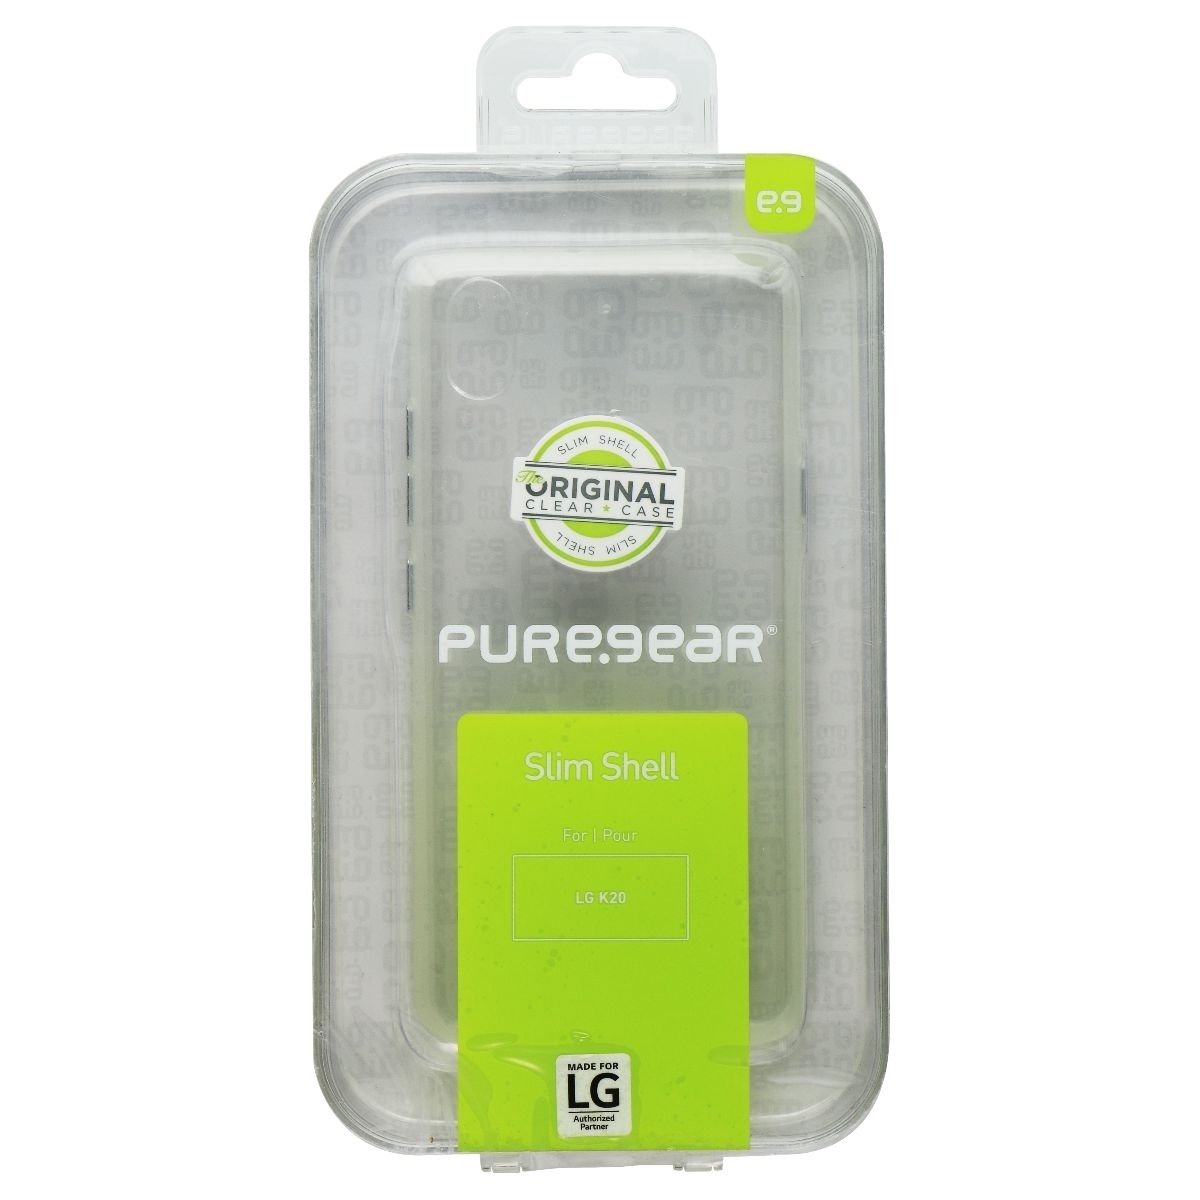 PureGear Slim Shell Series Case For LG K20 Smartphones - Clear (Refurbished)